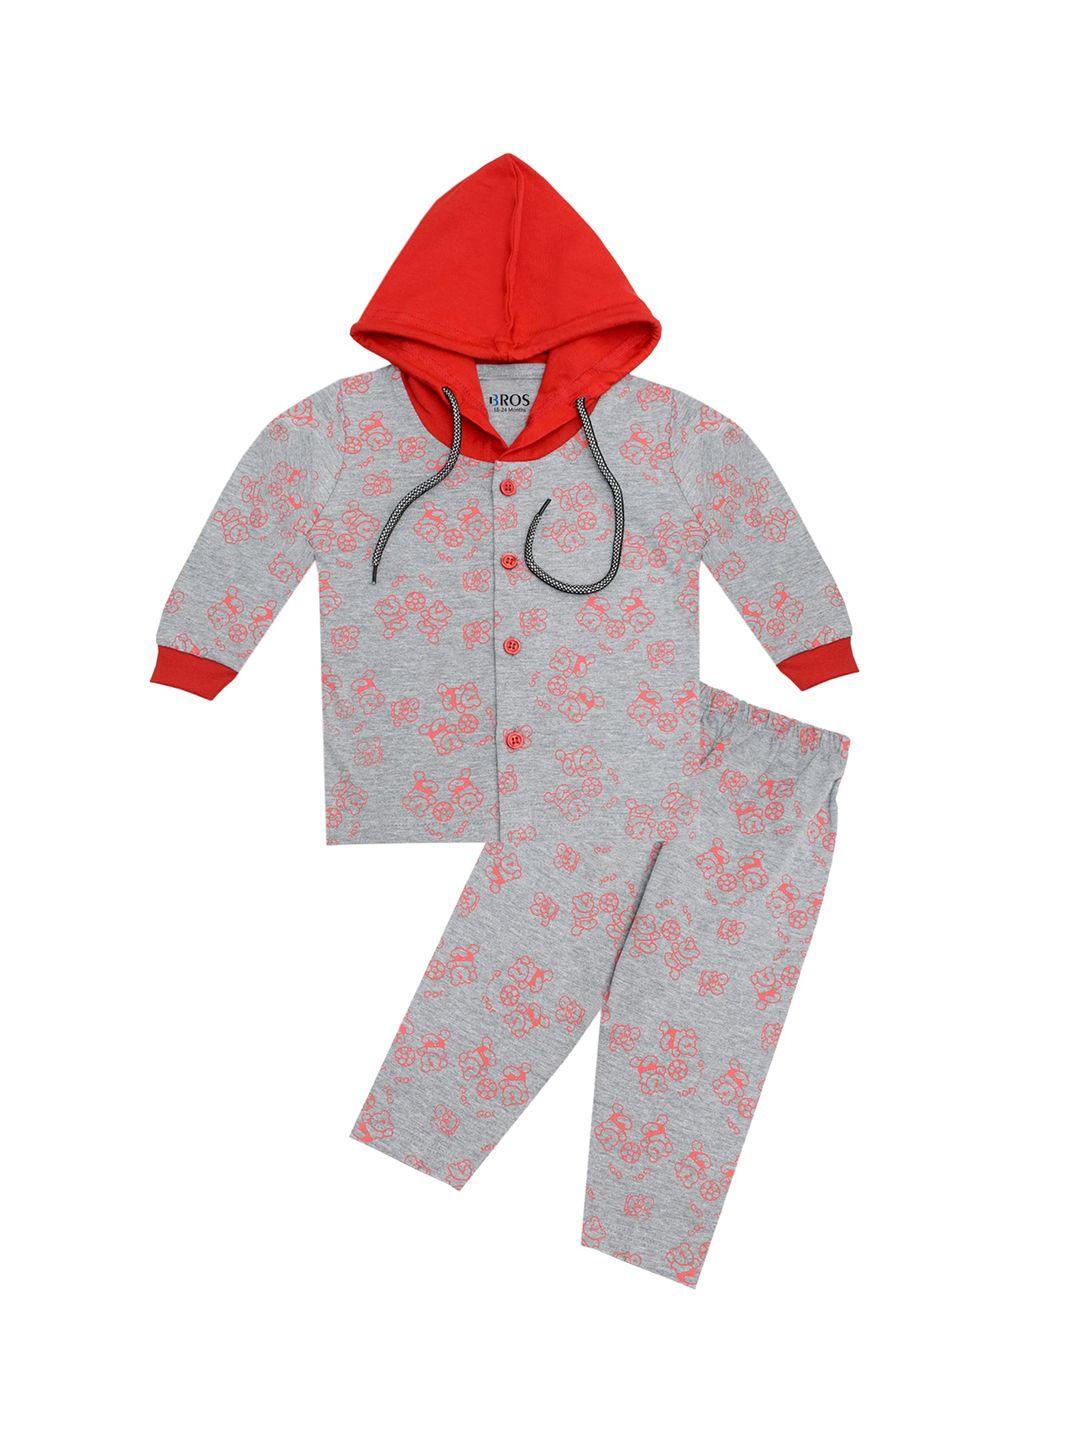 3bros unisex kids grey melange & red printed cotton hooded neck t-shirt & full pyjama set